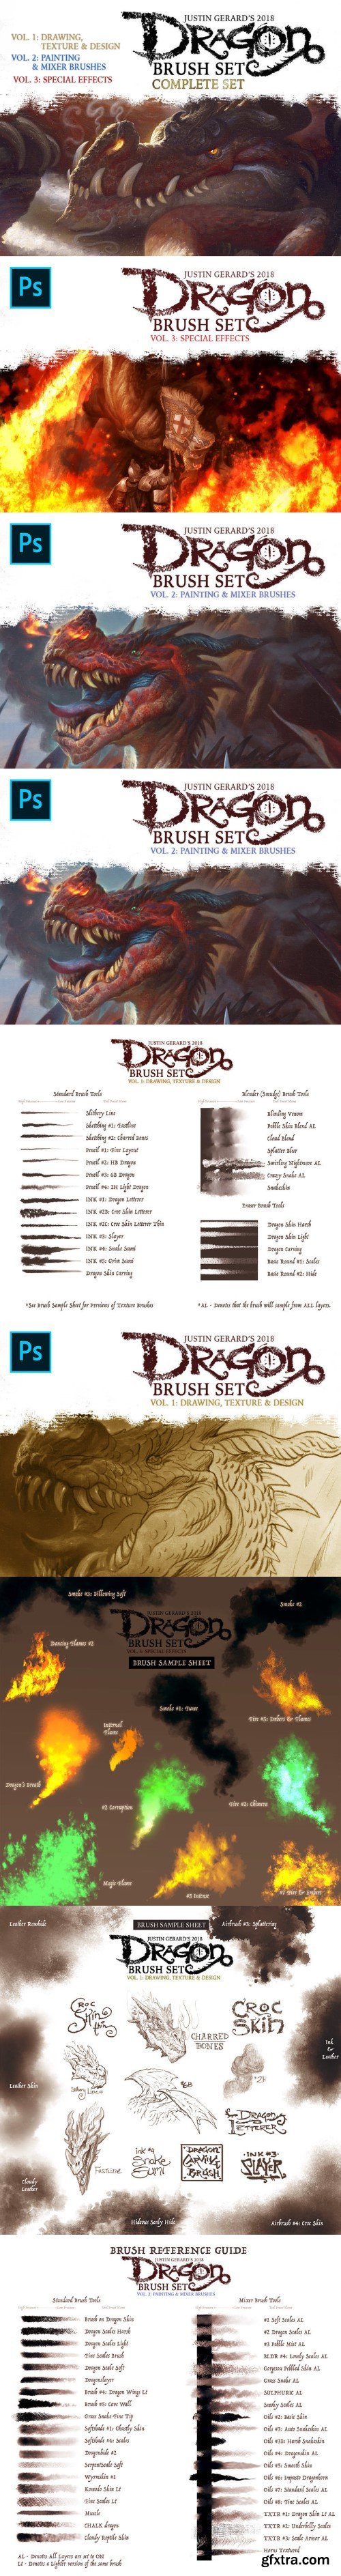 Dragon Brush Set COMPLETE SET for Photoshop